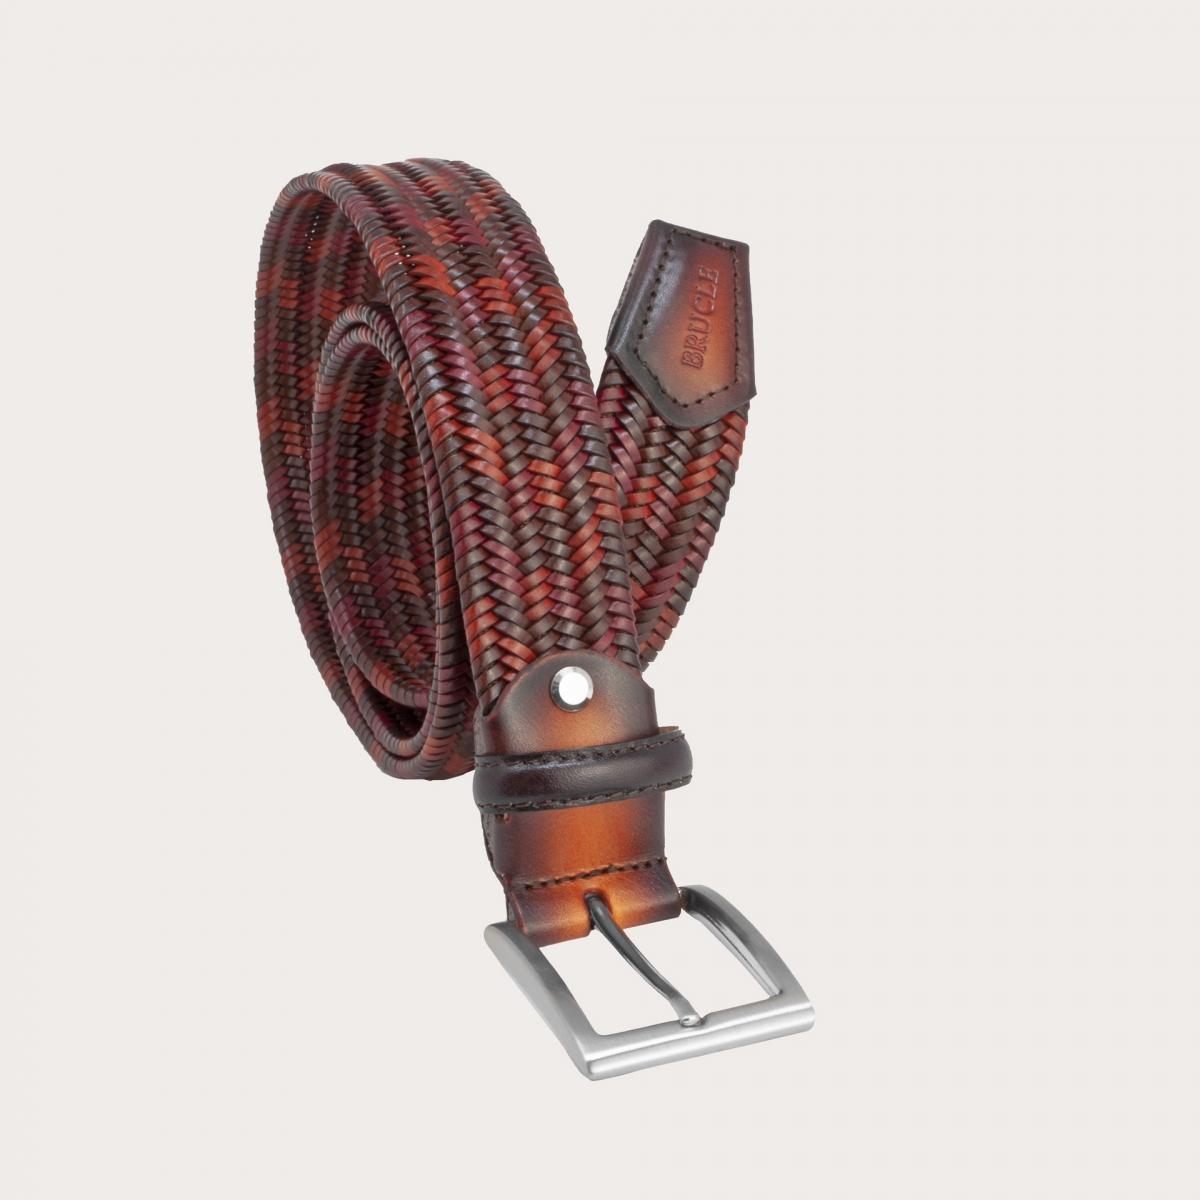 BRUCLE Cintura intrecciata elastica in pelle multicolor, marrone, rosso, burgundy